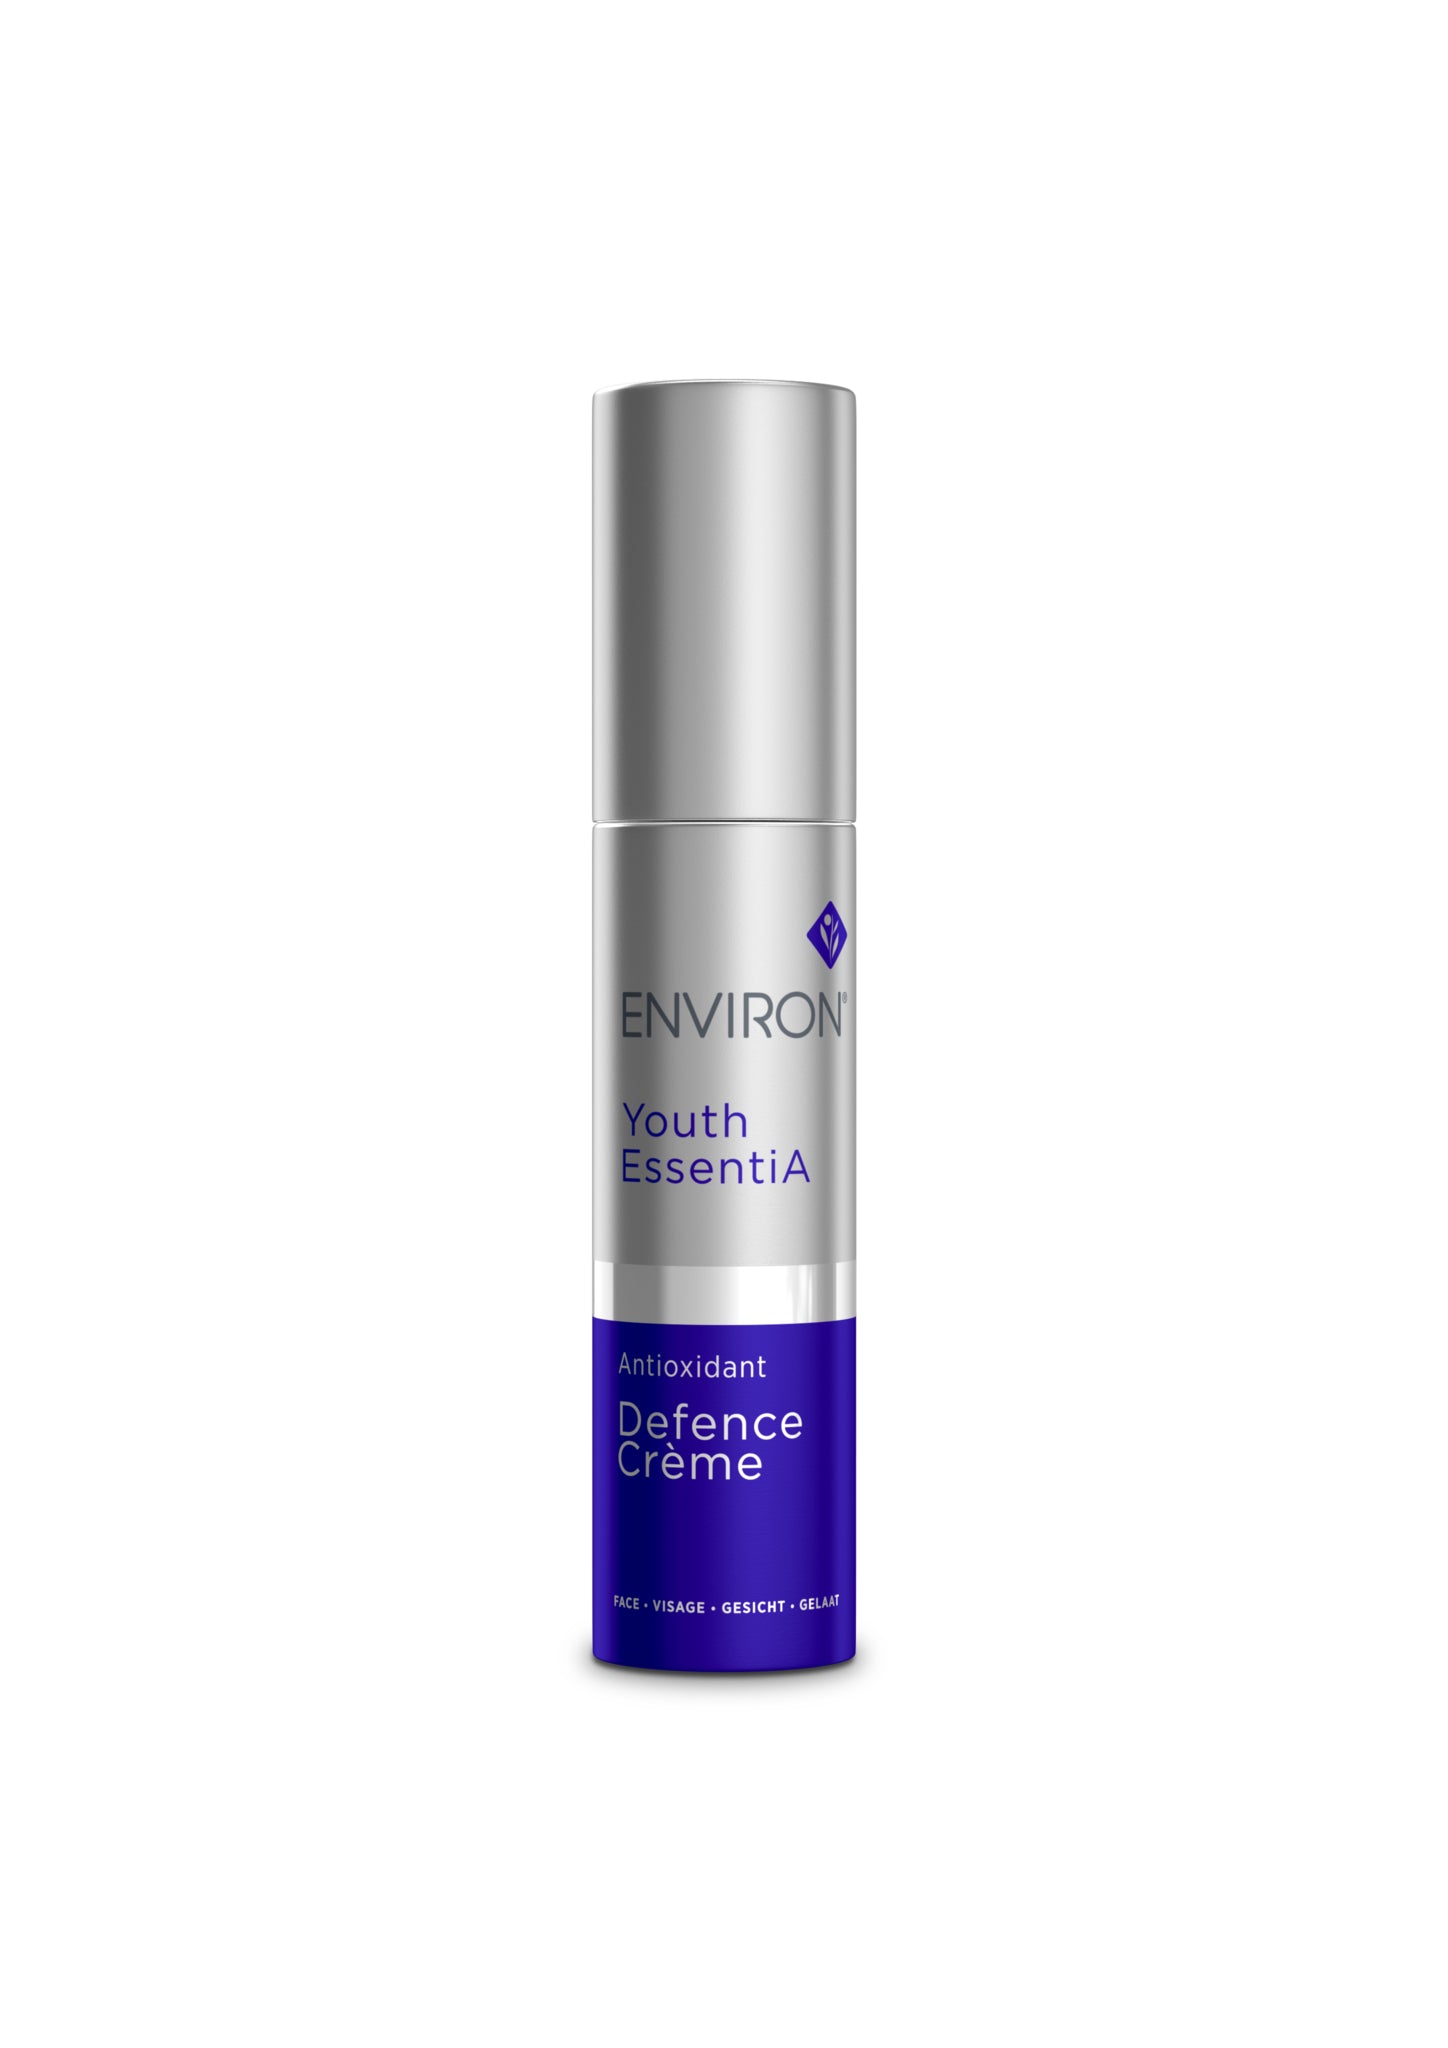 Environ skin care - Antioxidant Defence Crème